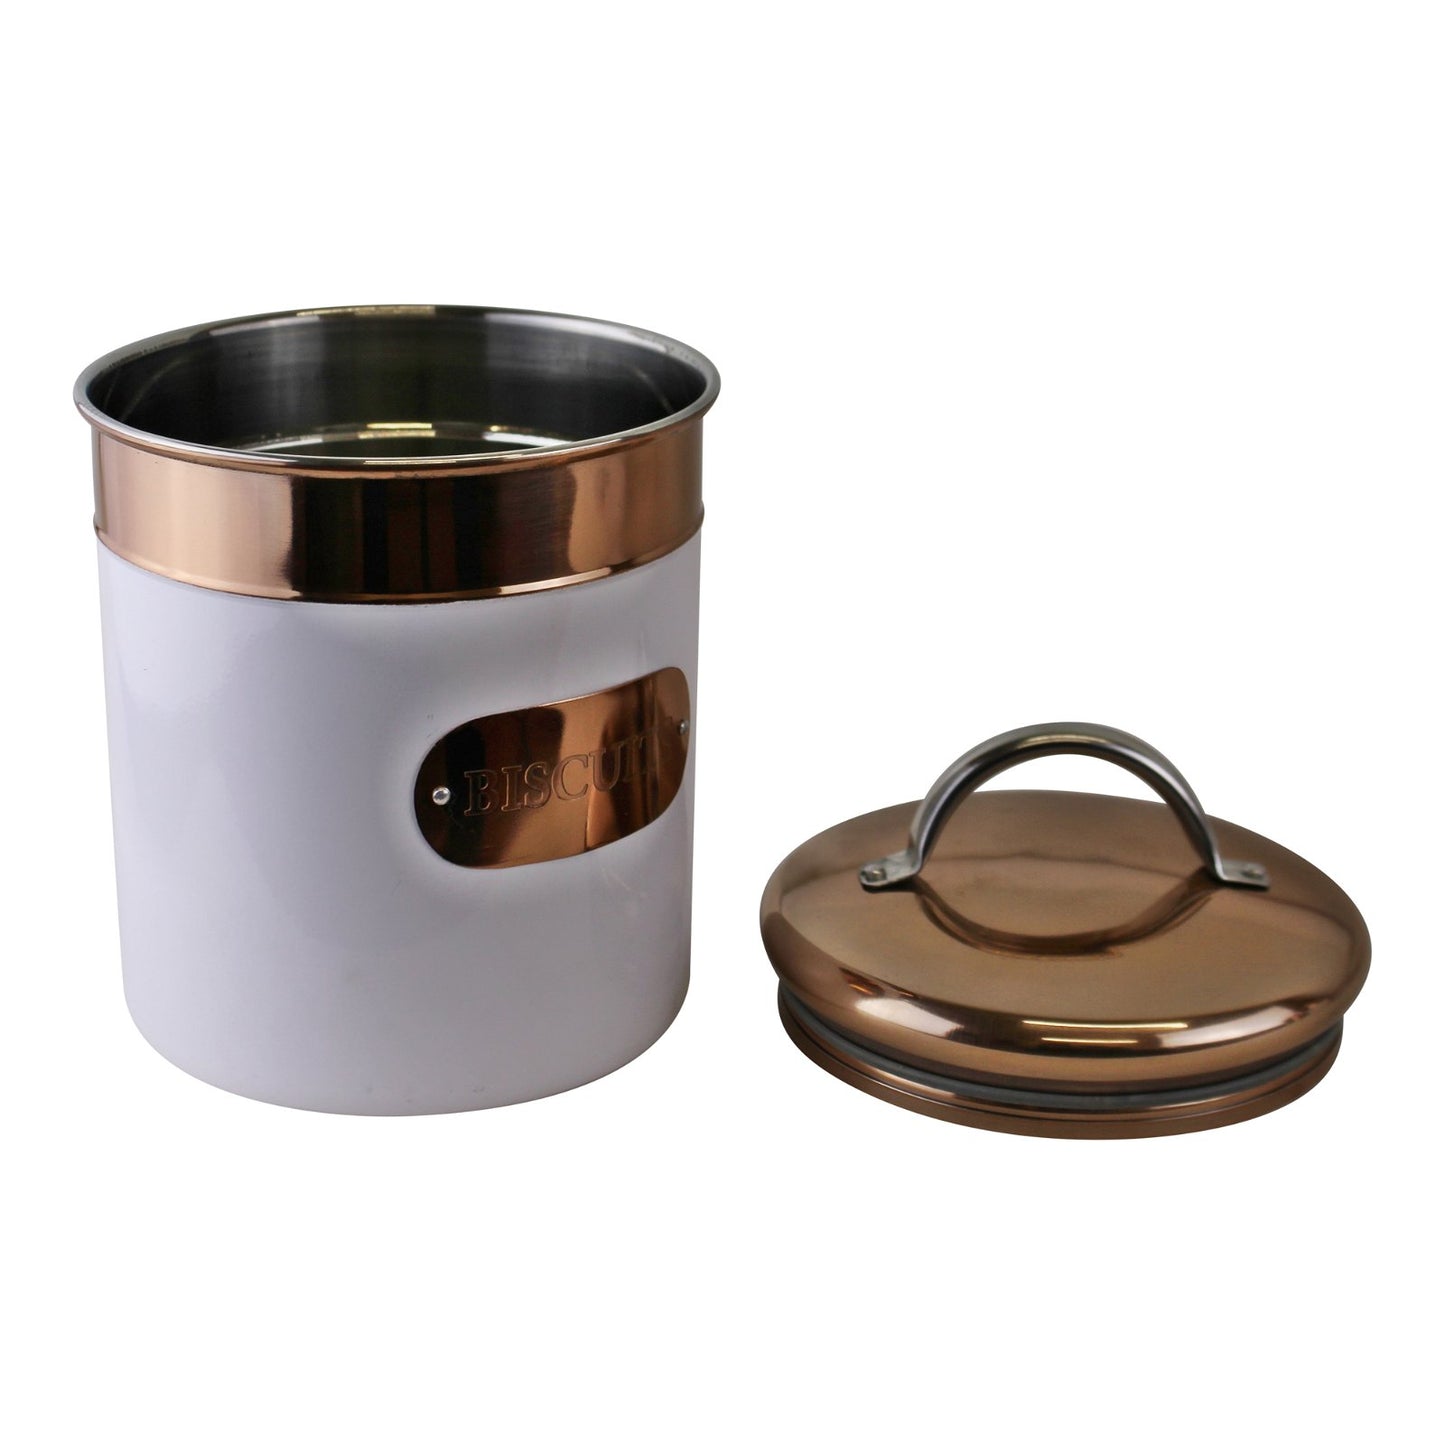 Biscuit Tin, Copper & White Metal Design